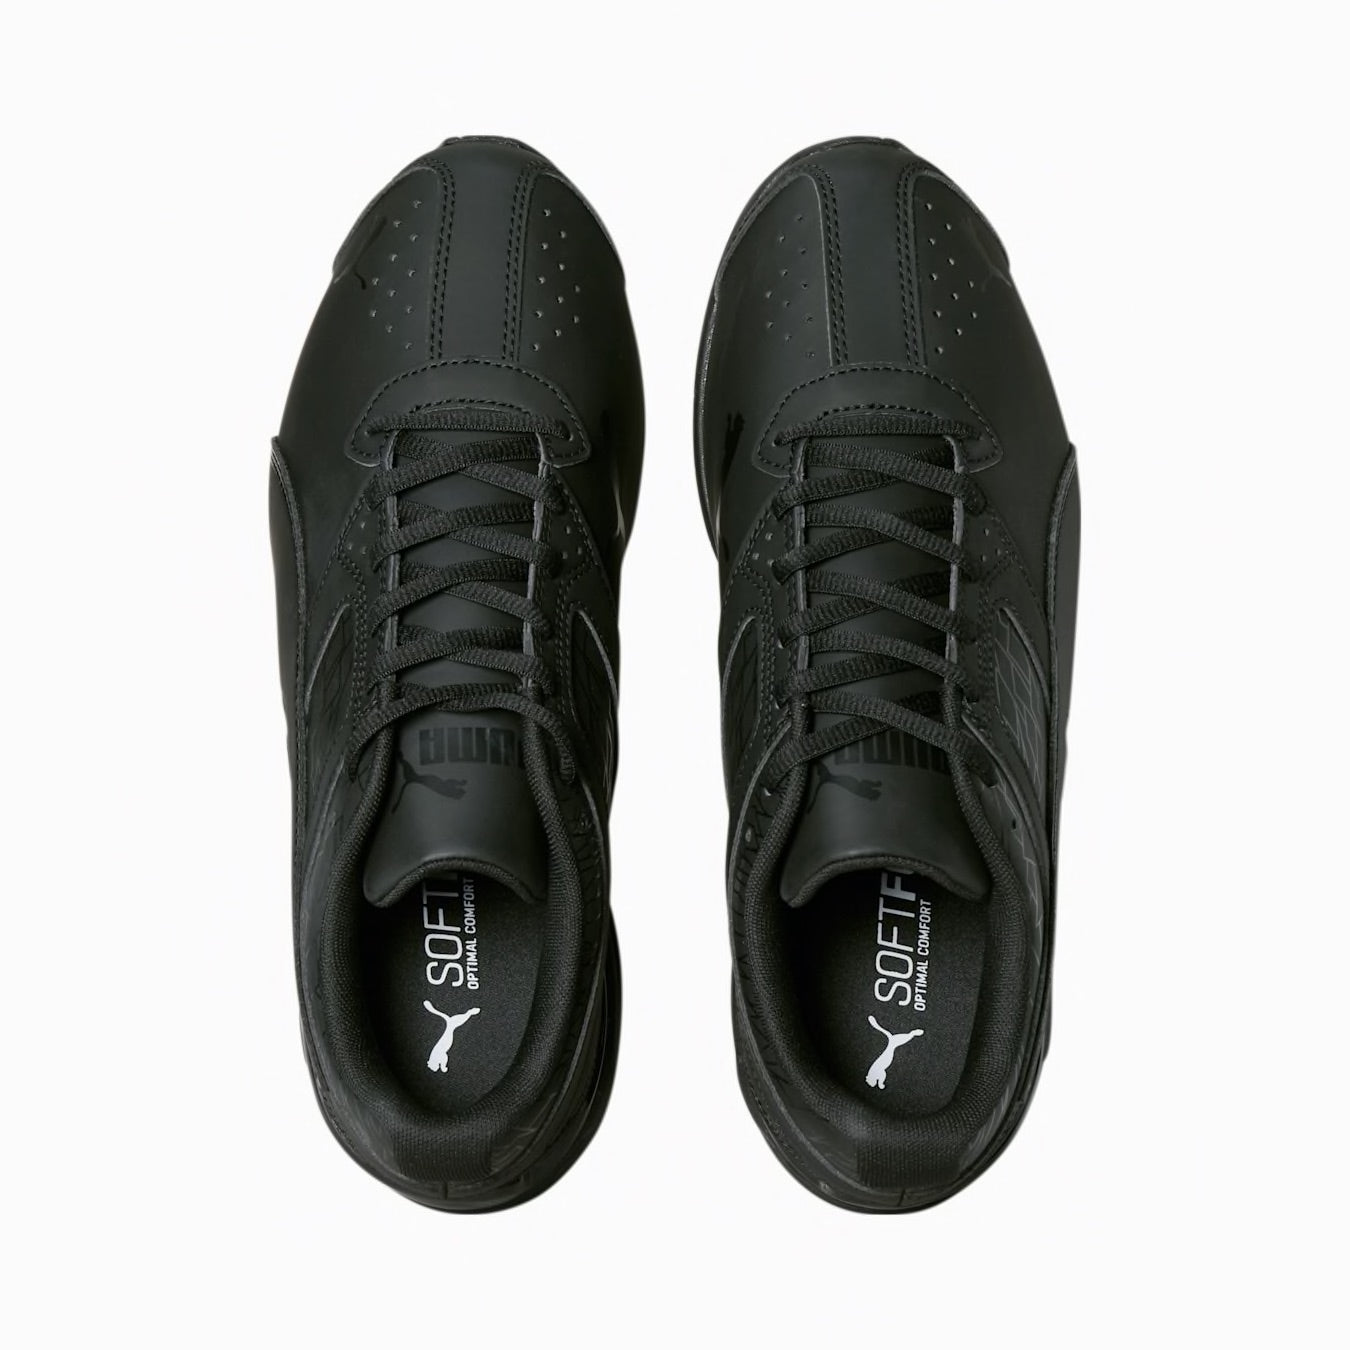 Puma Tazon 6 Fracture FM Men's Sneakers- Black